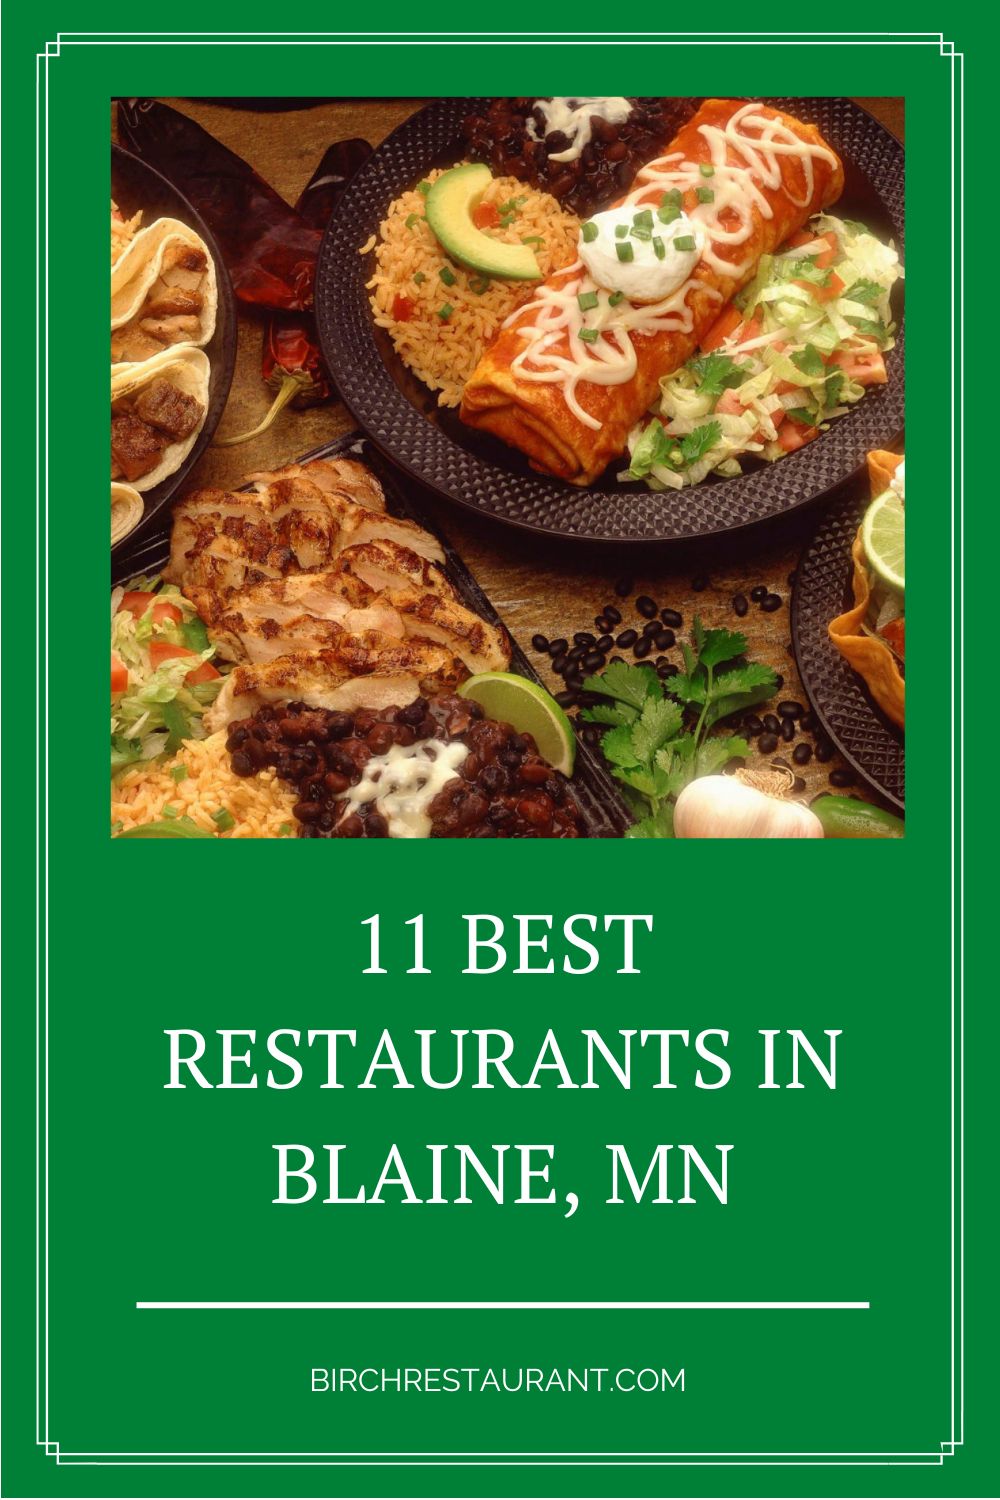 Best Restaurants in Blaine